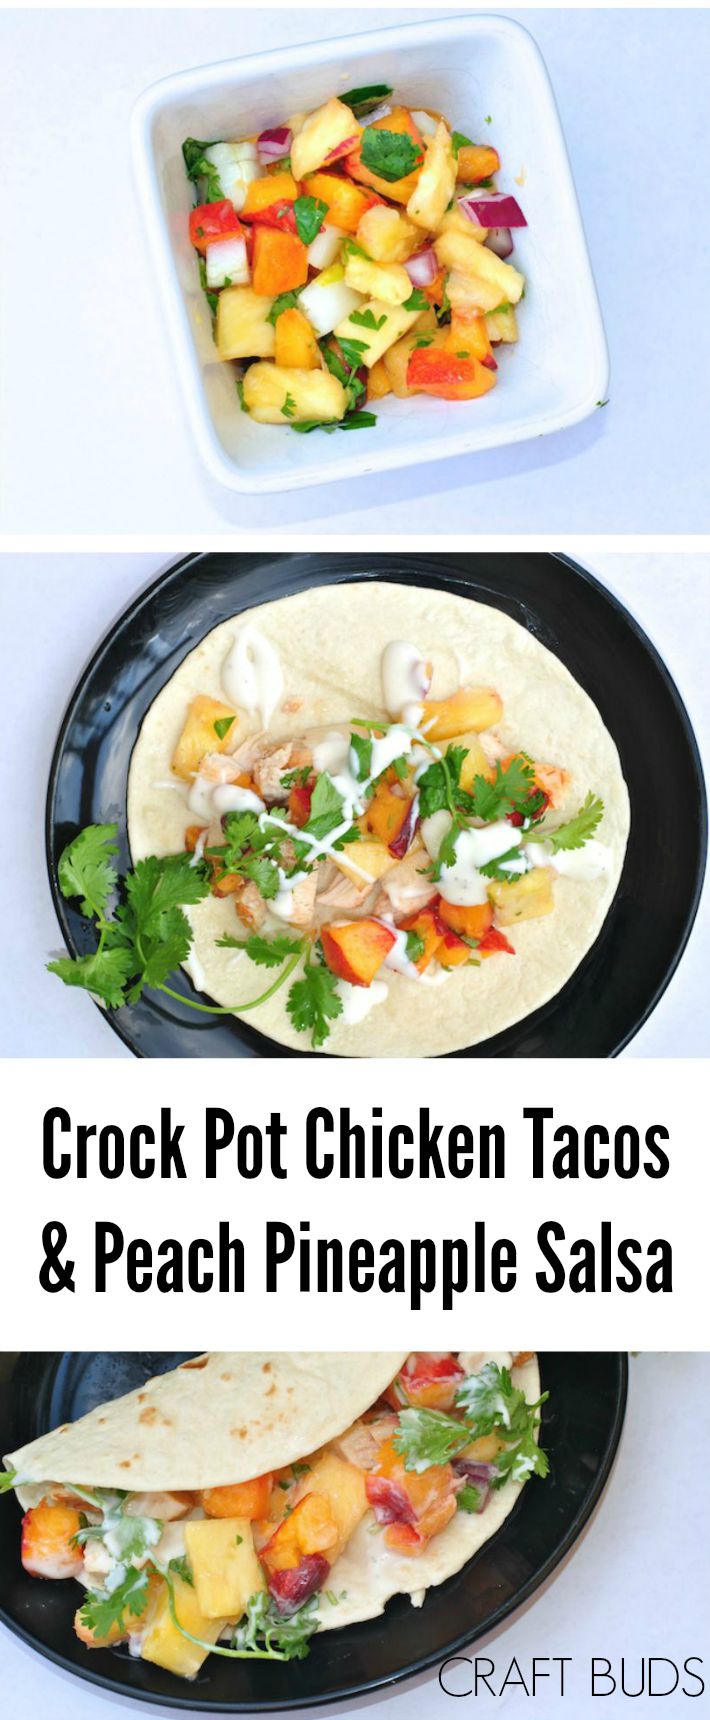 Crock Pot Chicken Tacos with Peach Pineapple Salsa| Craft Buds